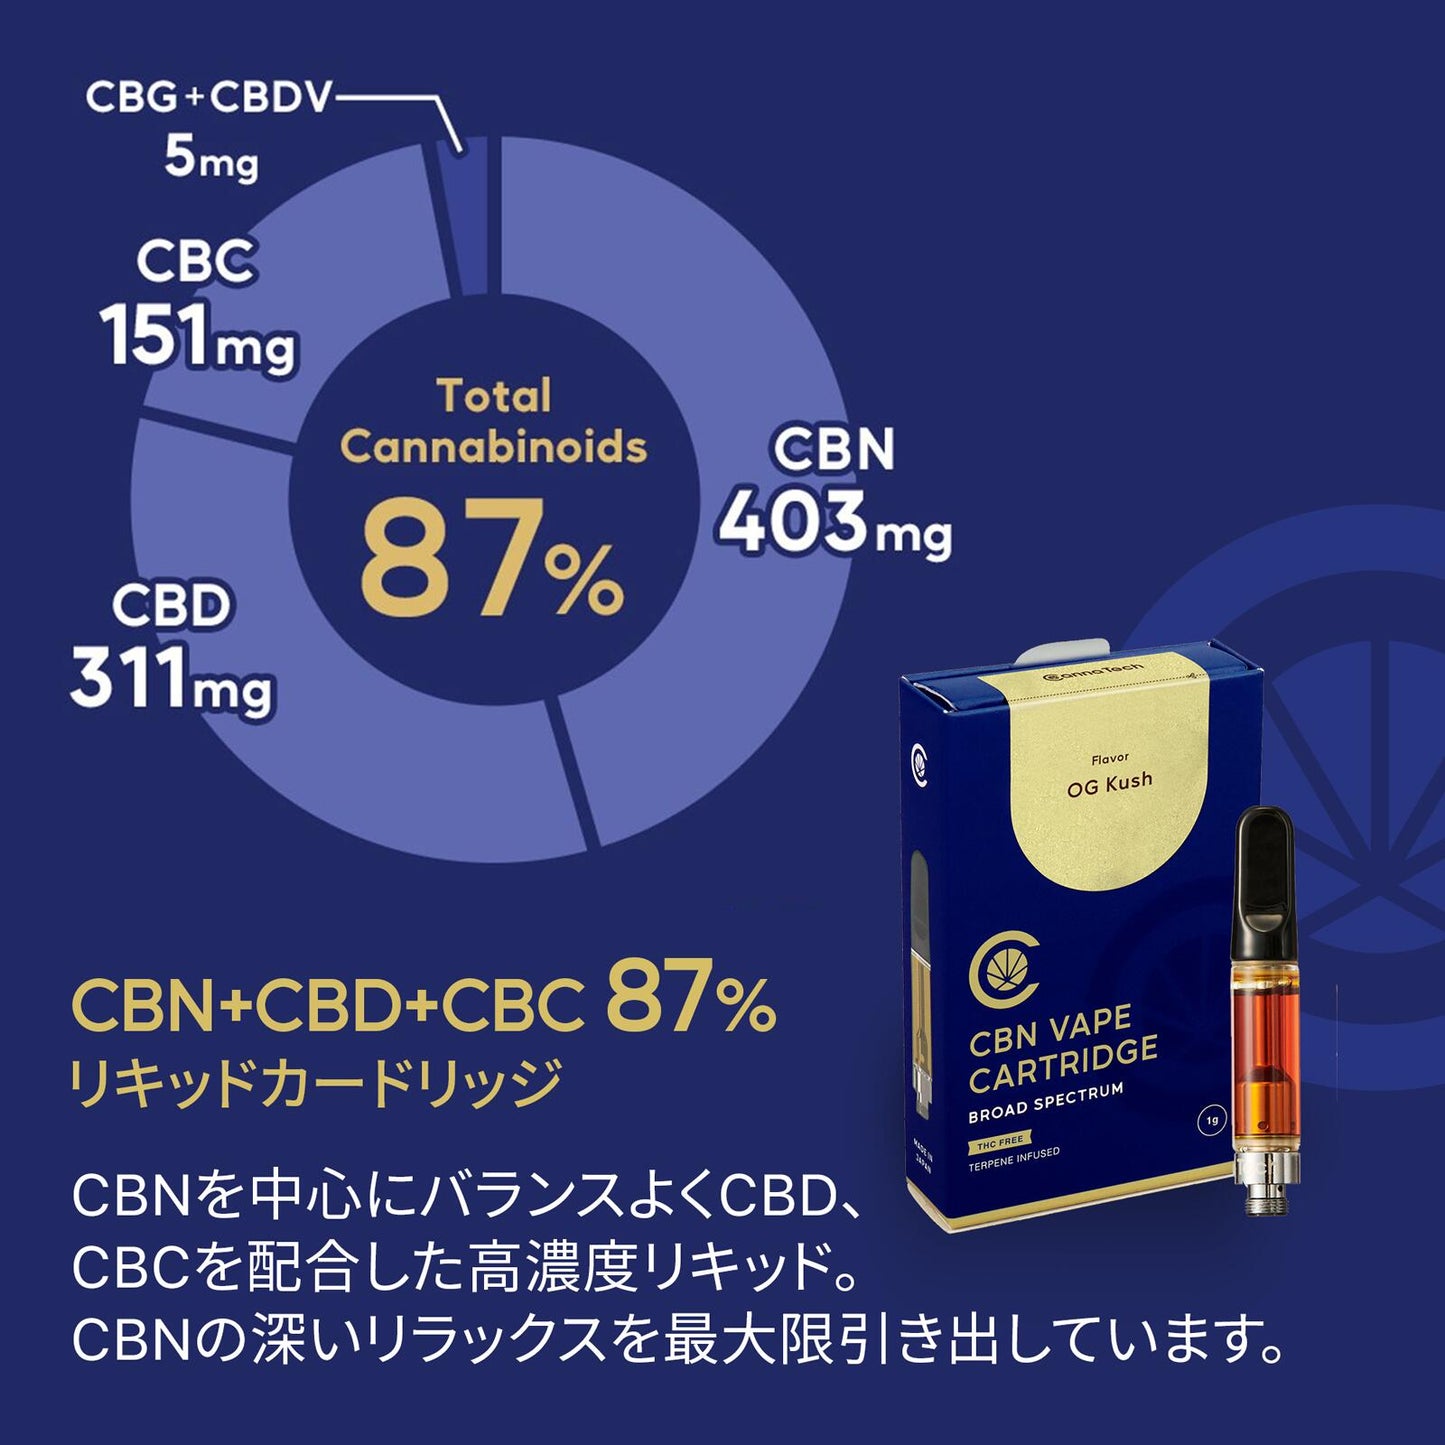 CBN リキッド 87% カートリッジ スターターセット   ( CBN403mg CBD311mg CBC151mg CBG+CBDV5mg)